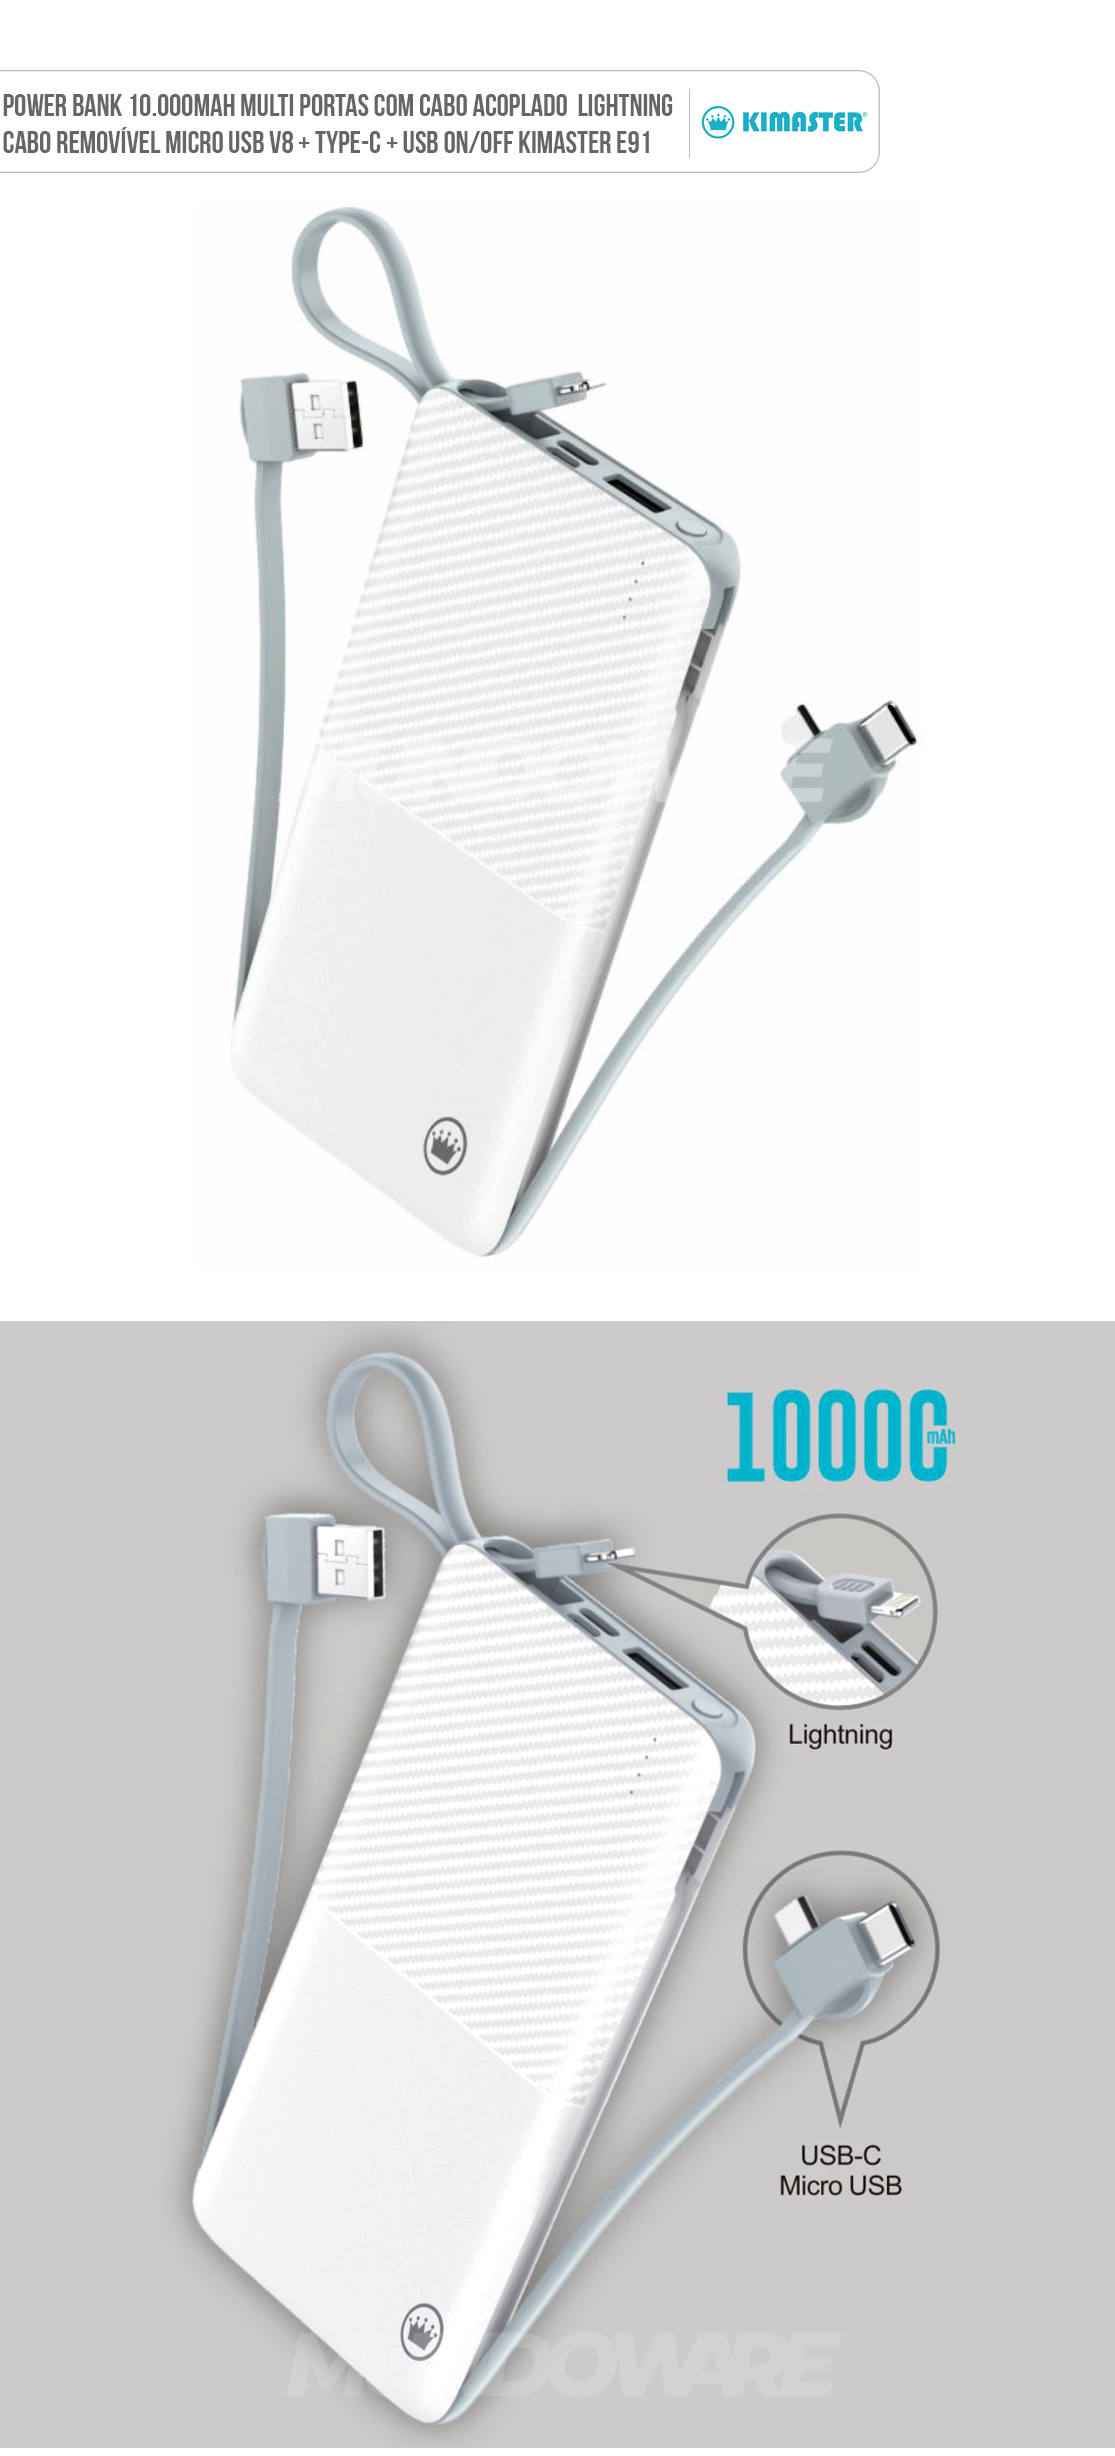 Carregador Portátil Power Bank 10000mAh cabo acoplado Lightning + cabo removível USB-C/Micro USB/USB Kimaster E91